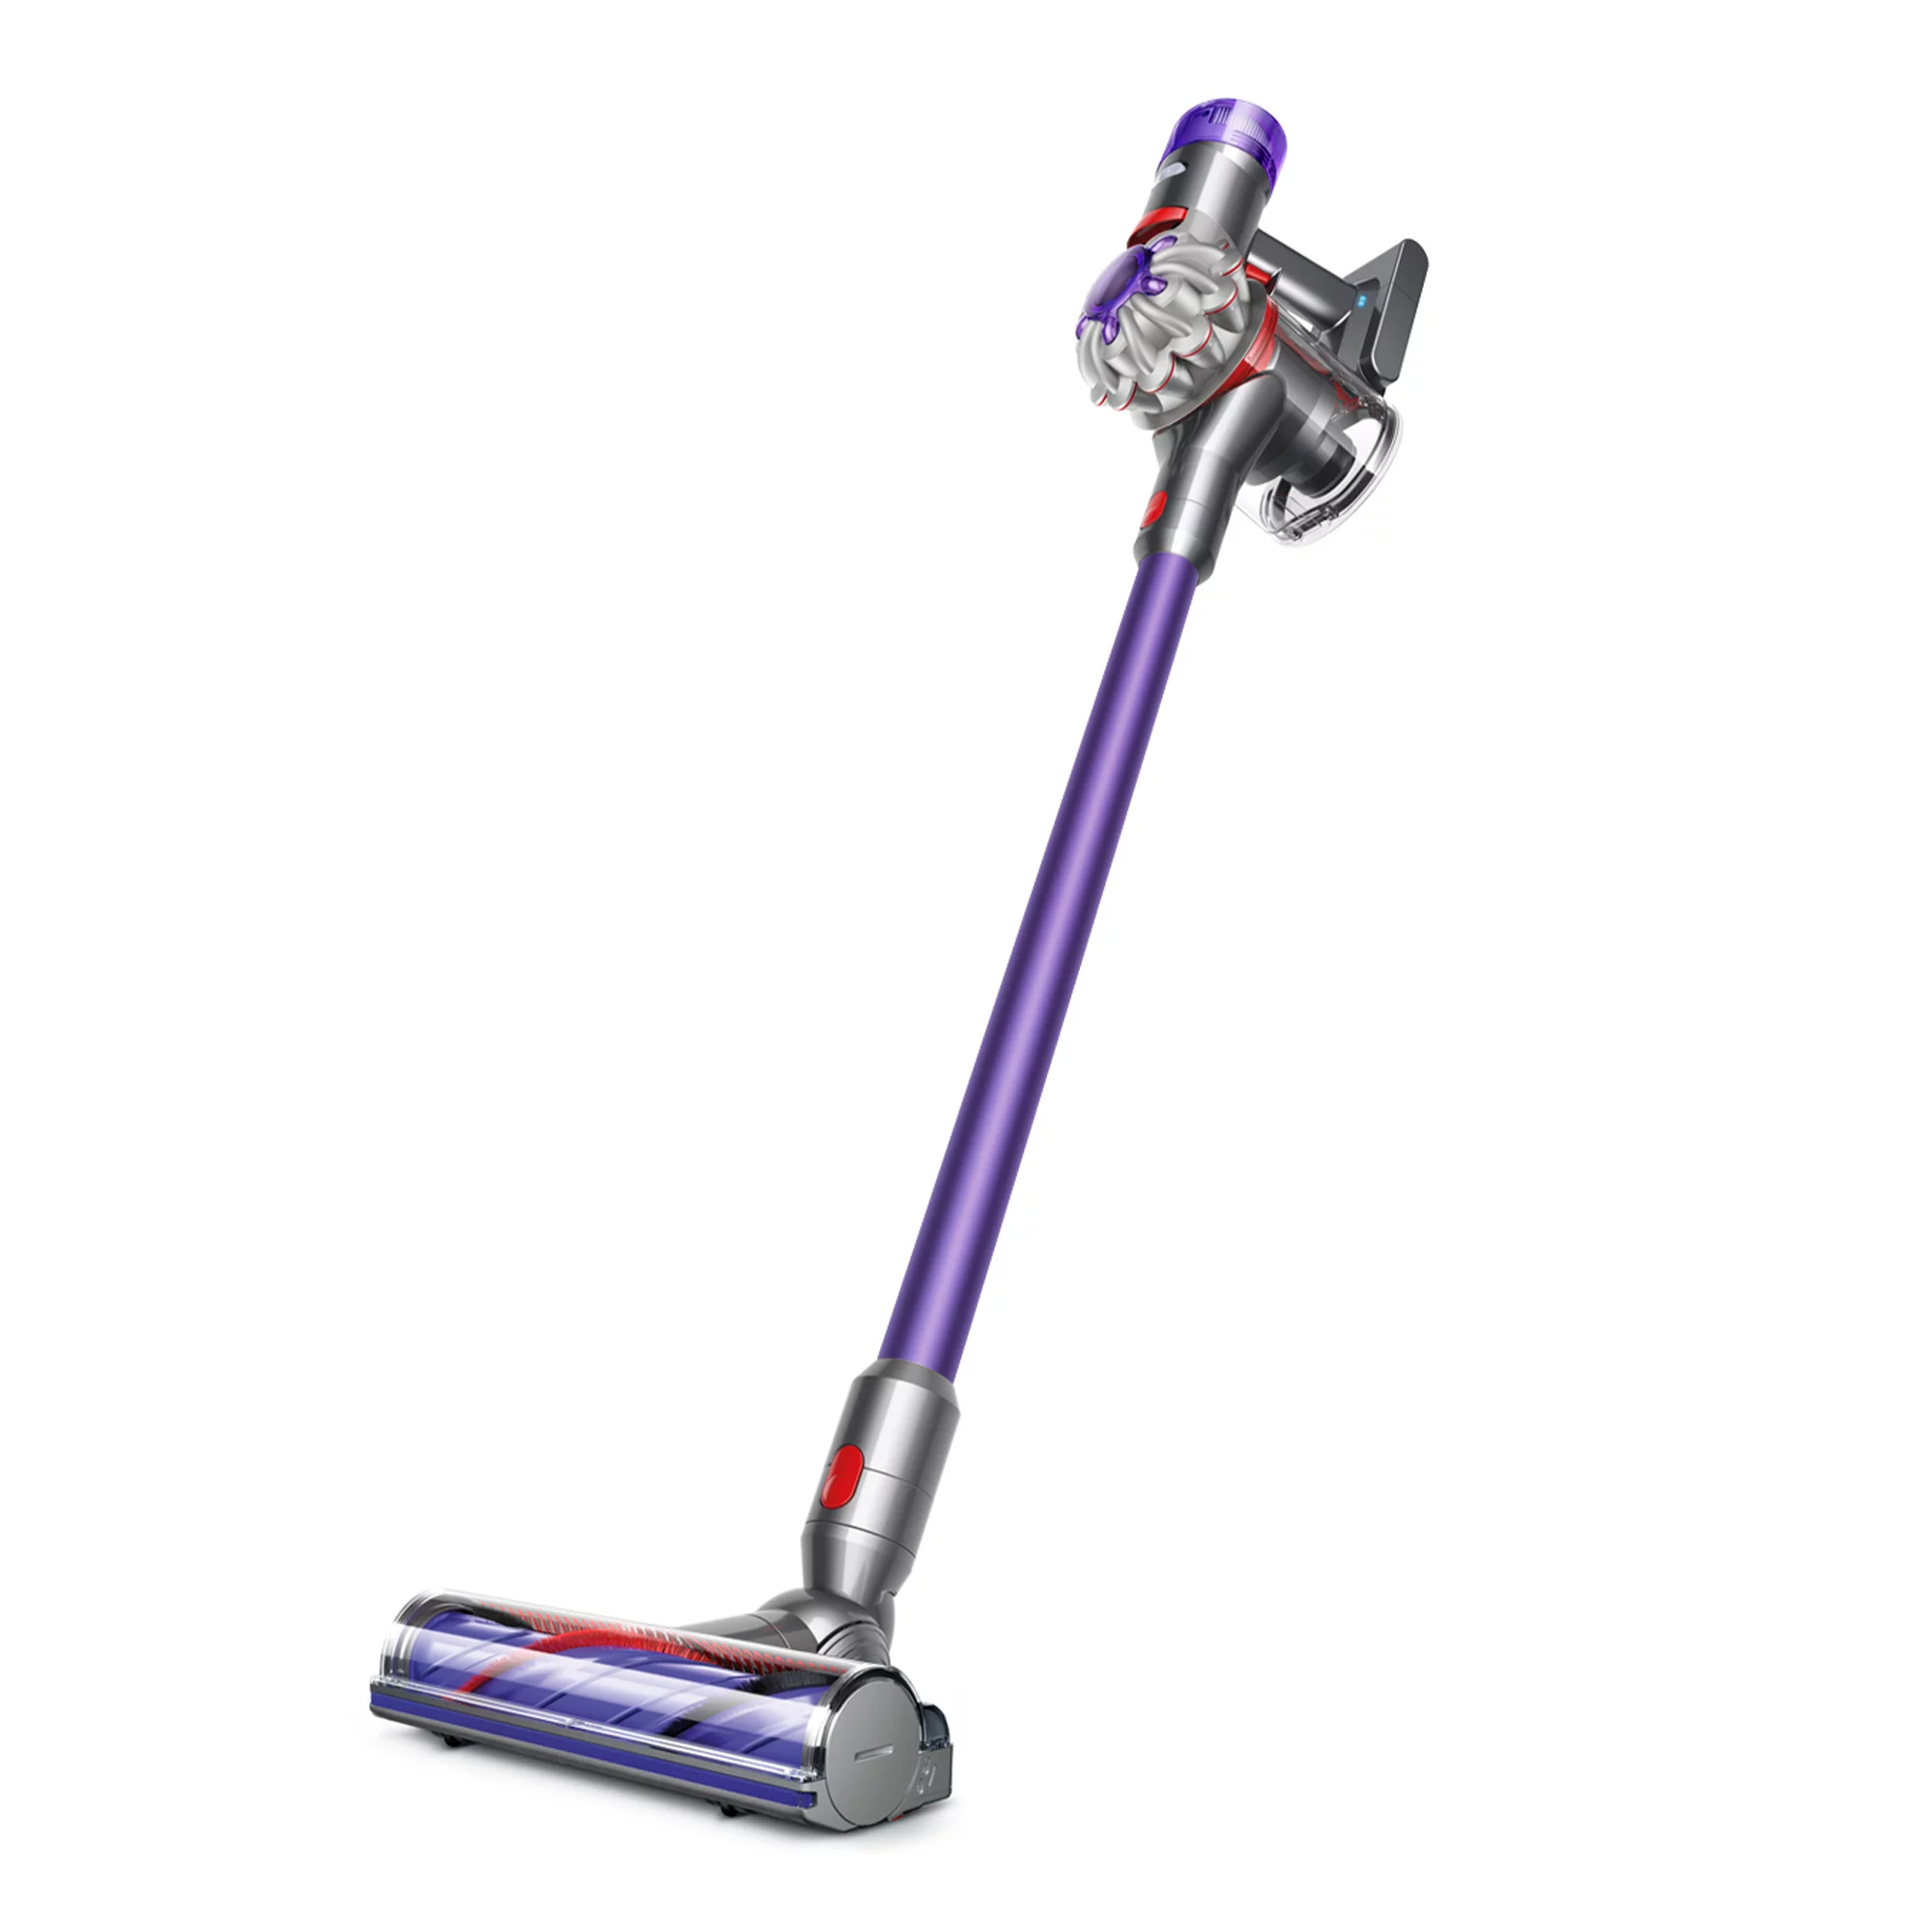 Dyson V8 Origin+ Cordless Vacuum, Purple - $520.99